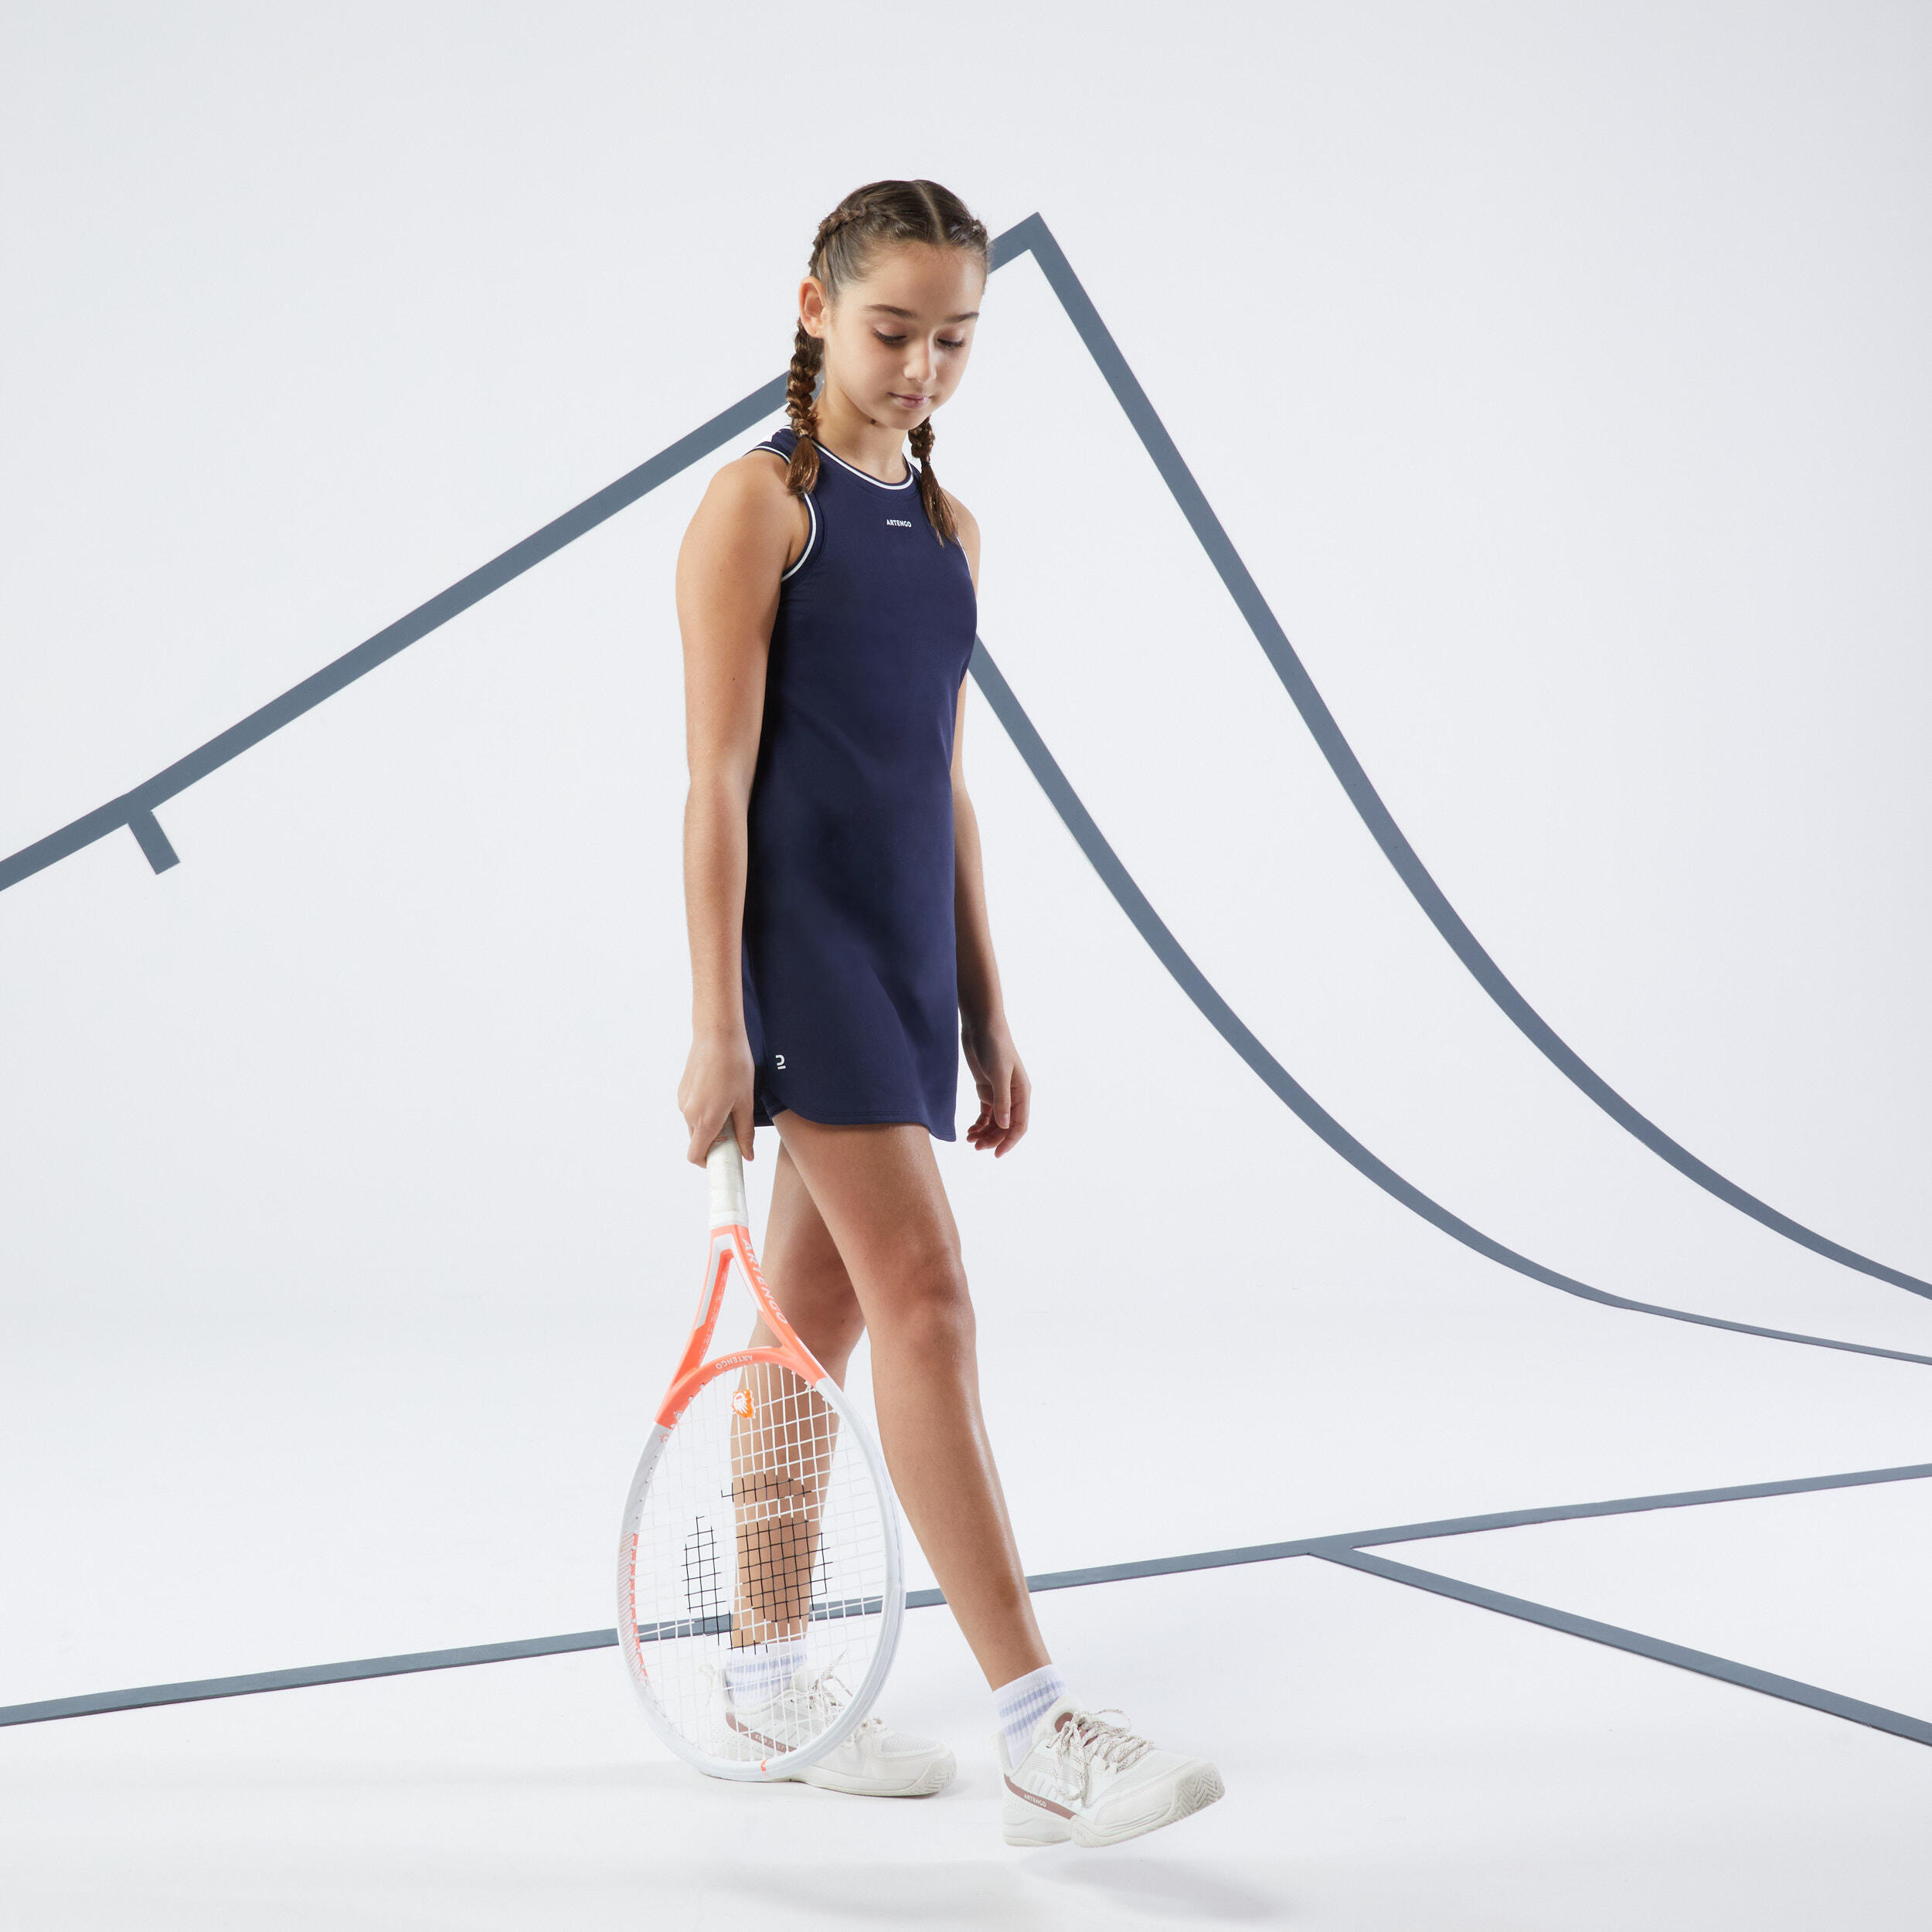 Girls' Straight-Cut Tennis Dress TDR 500 - Navy/White 2/7